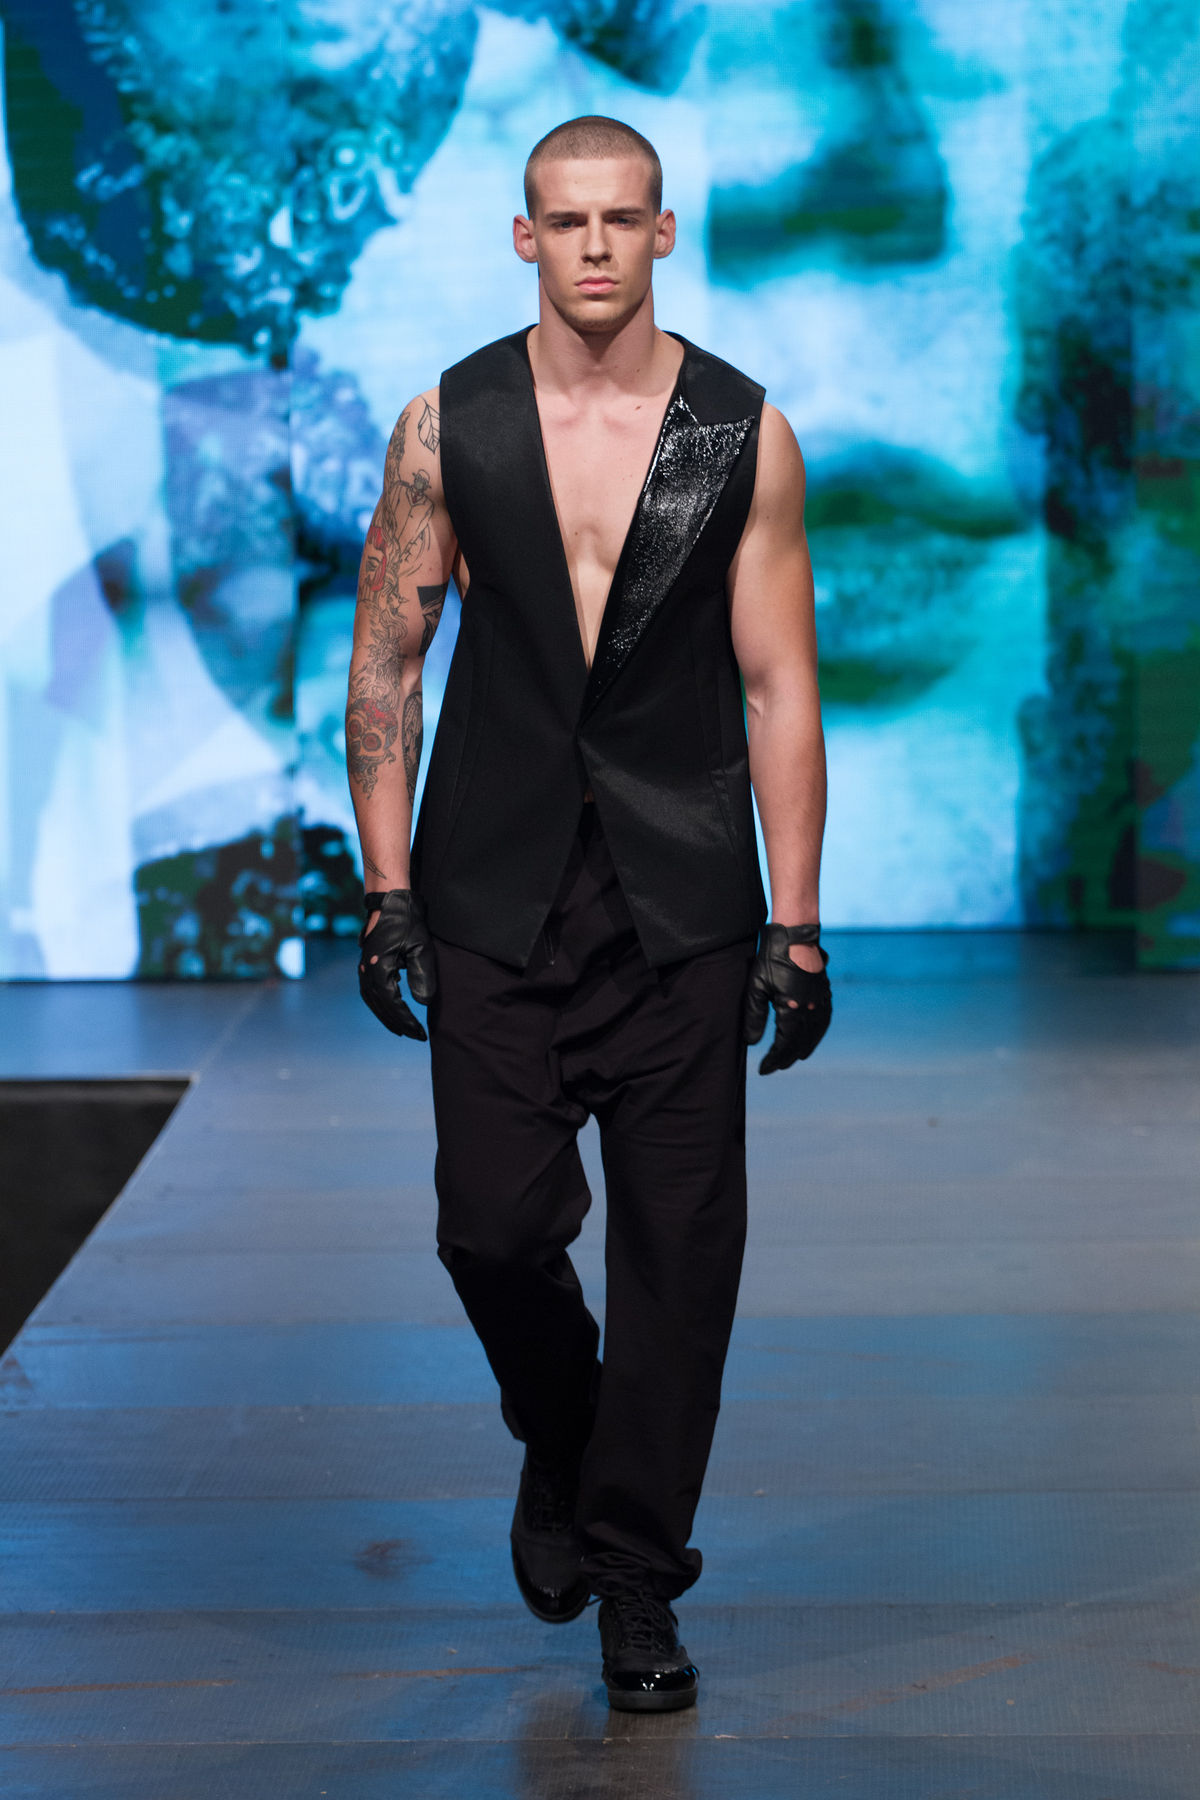 lukas-kimlicka-menswear-fashion-live-black-stage-2013_19-nestandard1.jpg